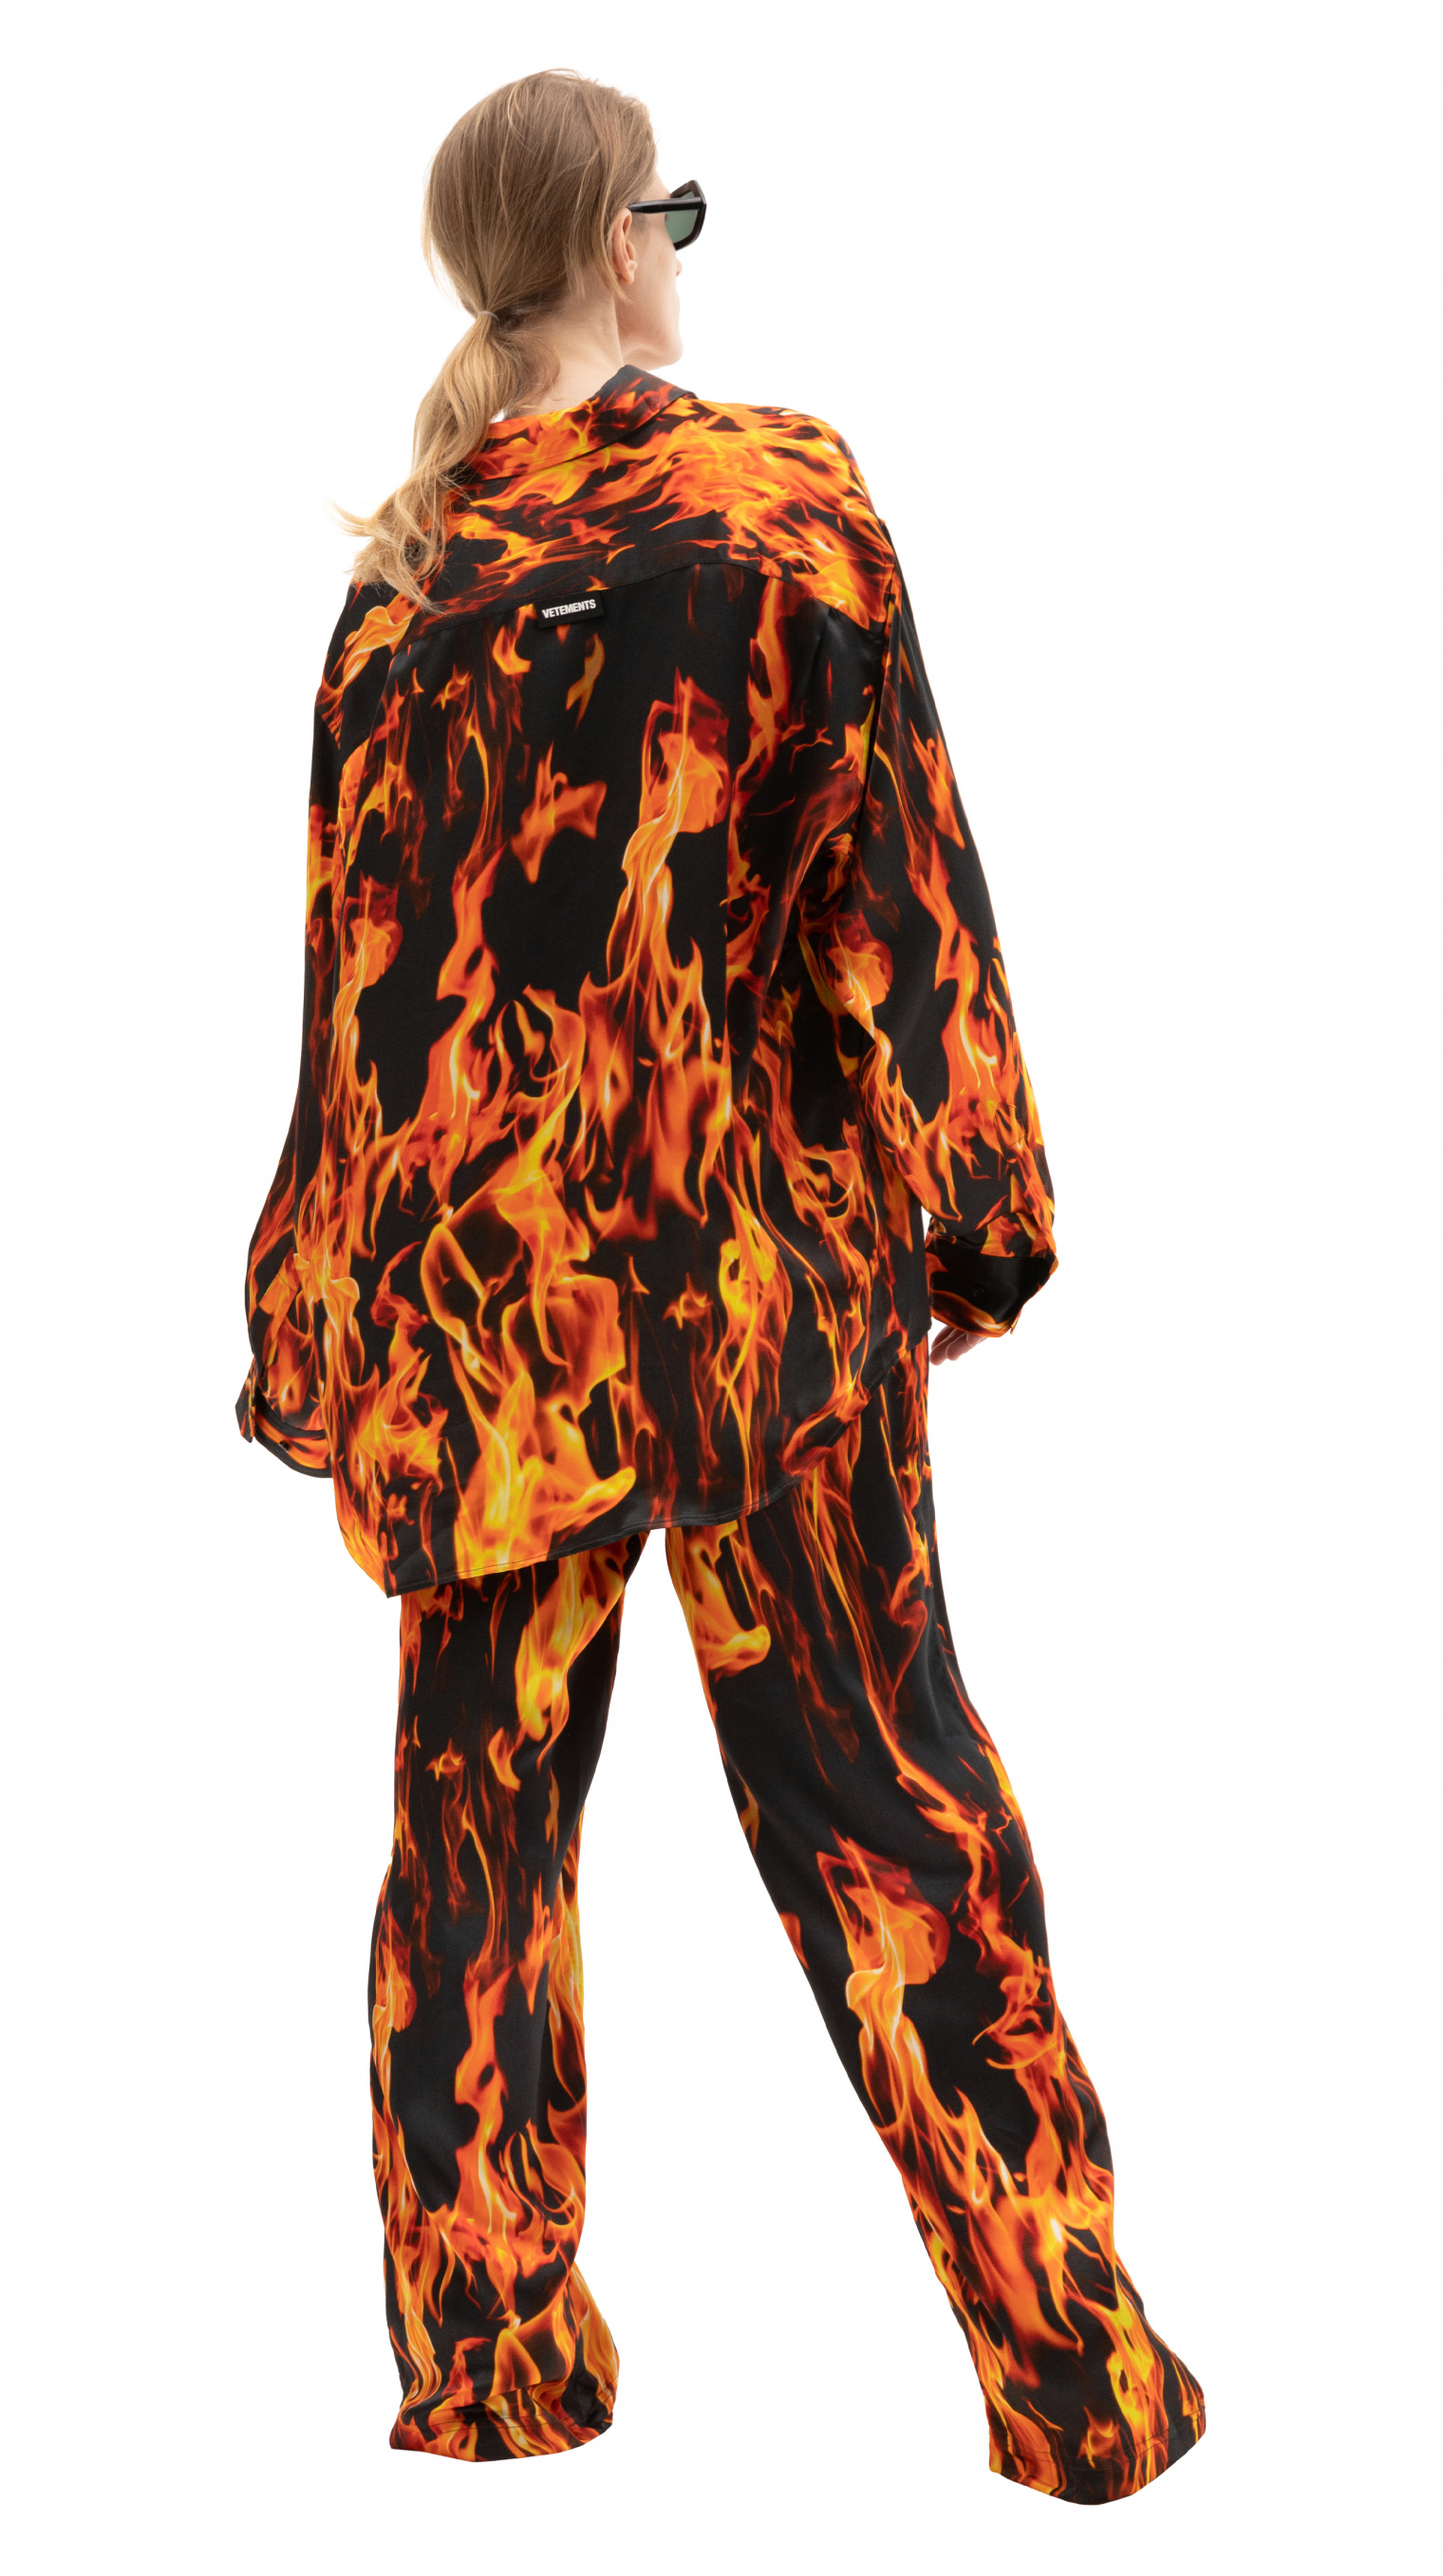 VETEMENTS Fire Pyjama Shirt